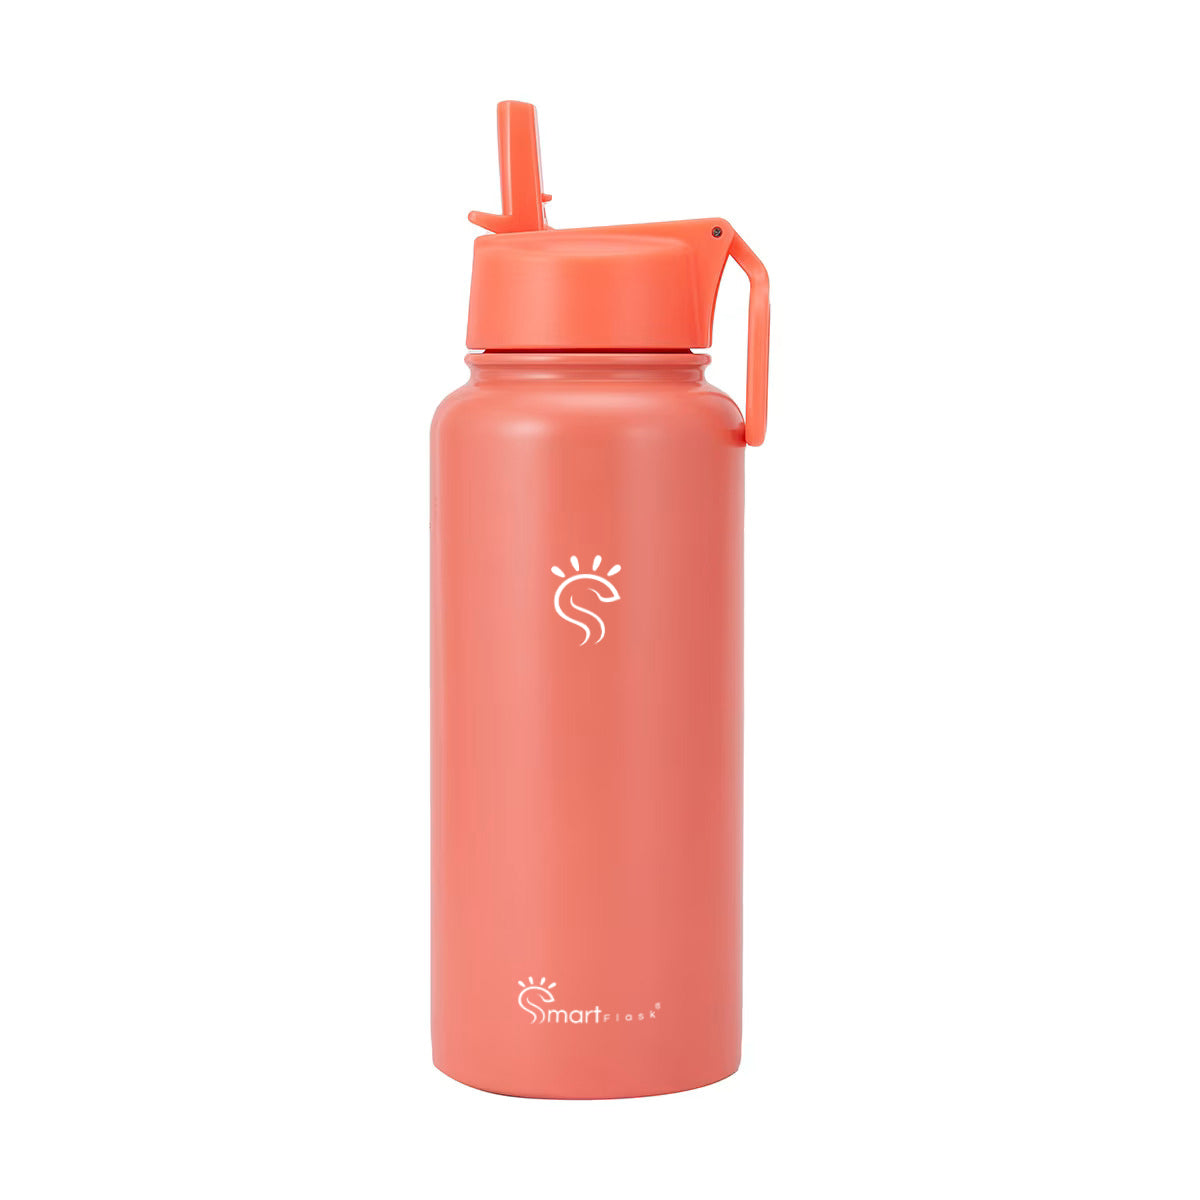 Starfish Orange Smart Reusable Water Bottle with Straw